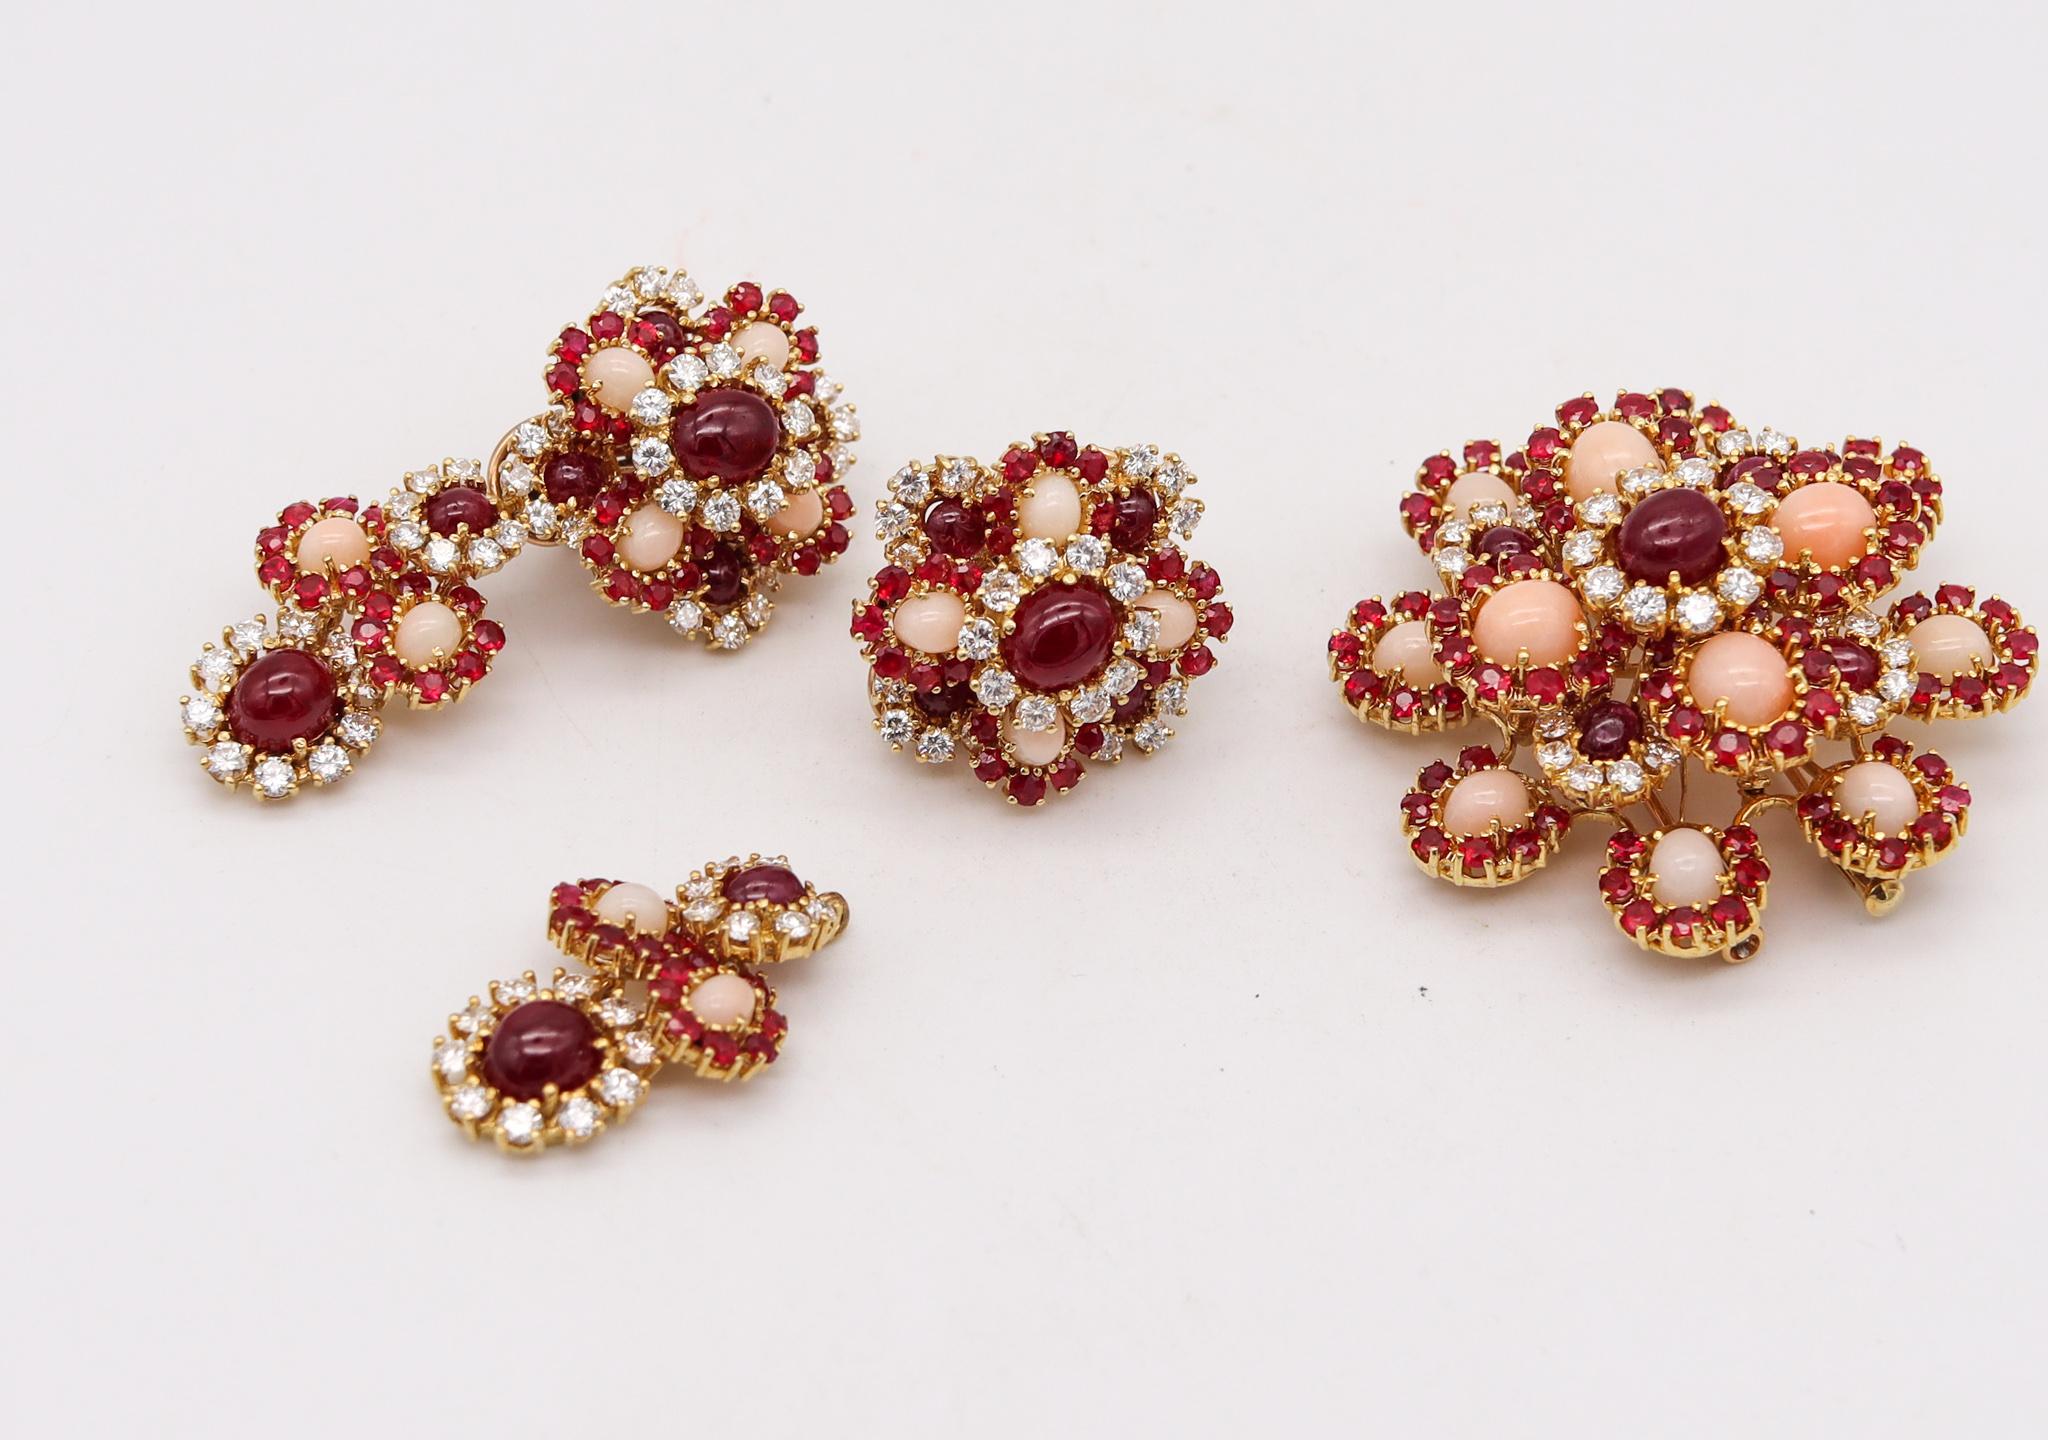 Brilliant Cut Pery Et Fils 1960 Paris Convertible Earrings Brooch 18Kt 51.91 Cts Diamonds Ruby